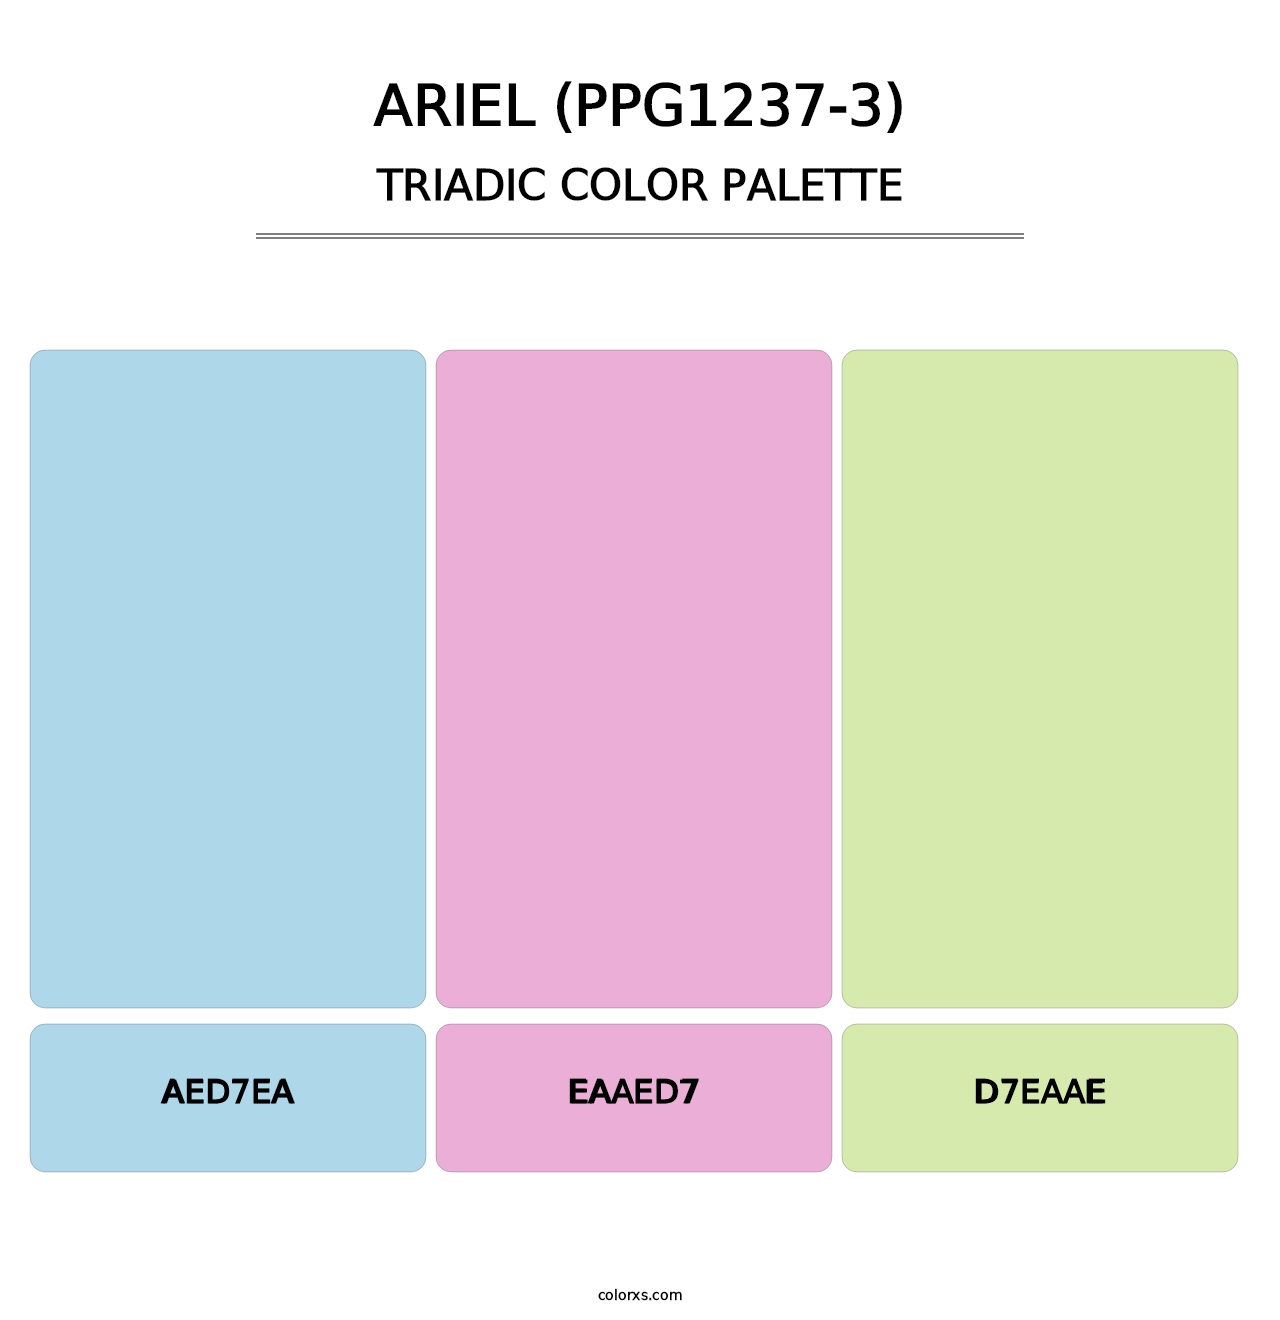 Ariel (PPG1237-3) - Triadic Color Palette